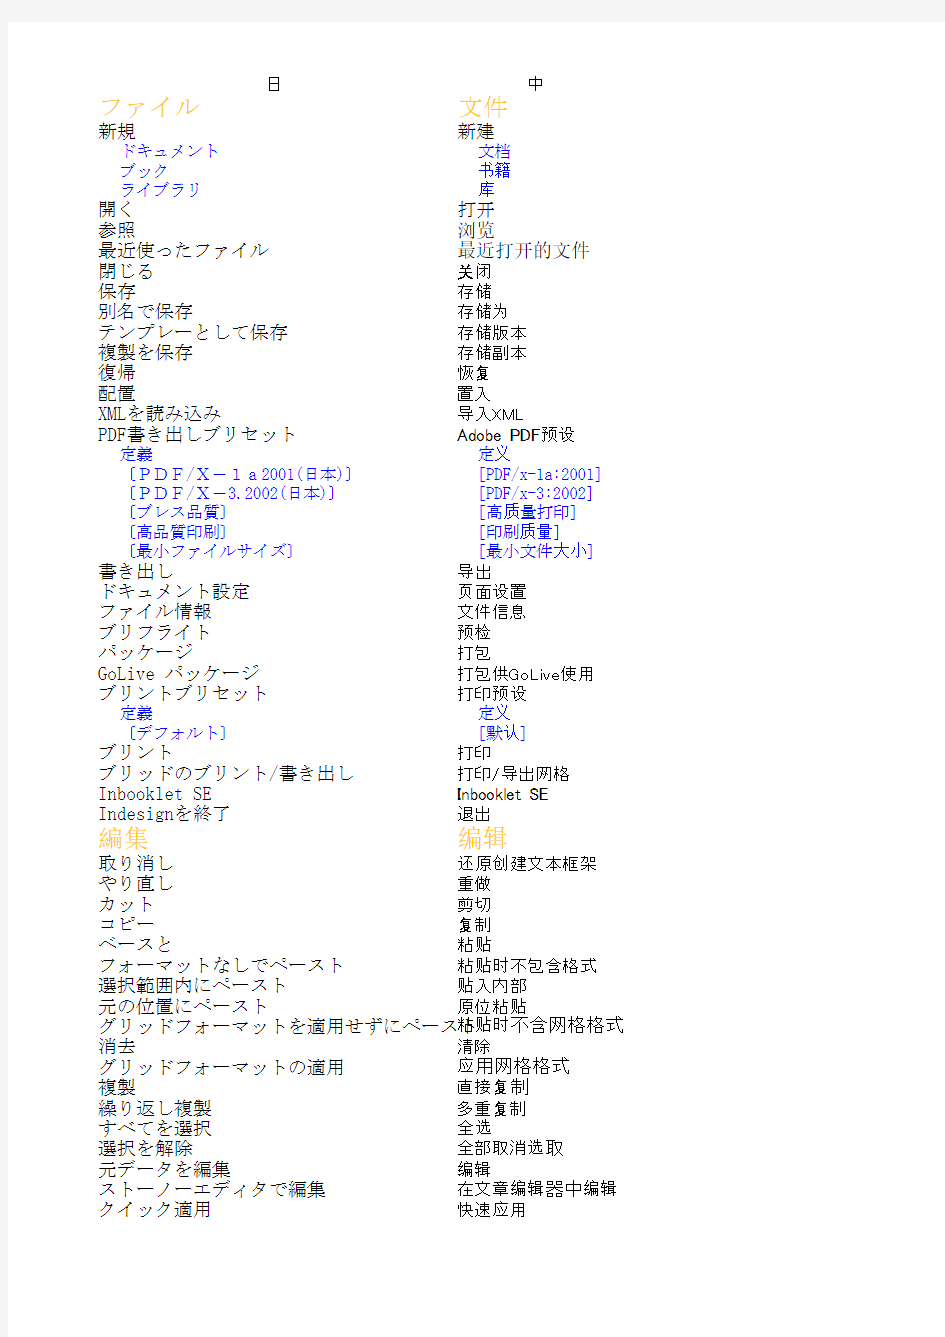 Indesign和Illustrator中日文对照菜单